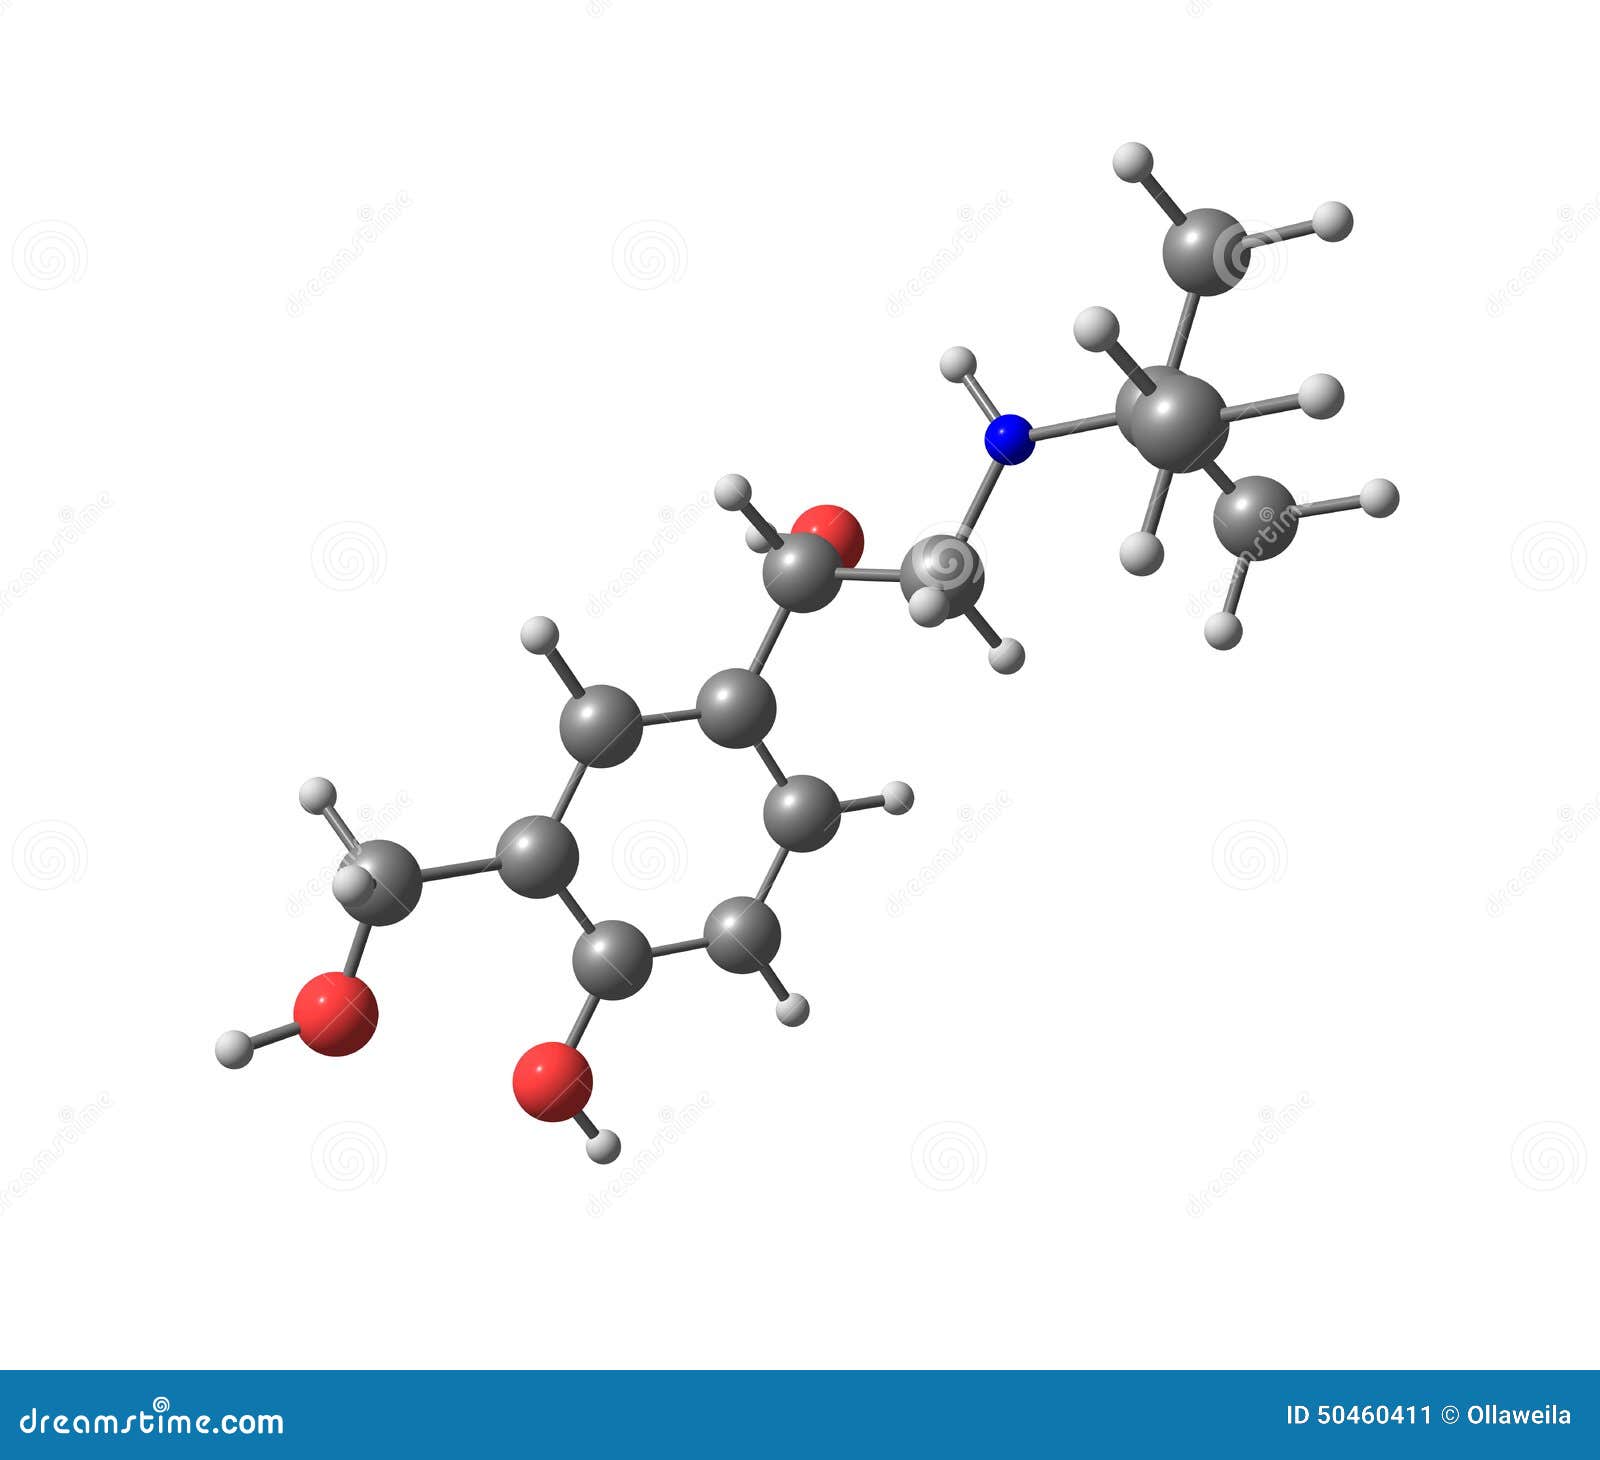 salbutamol molecule on white